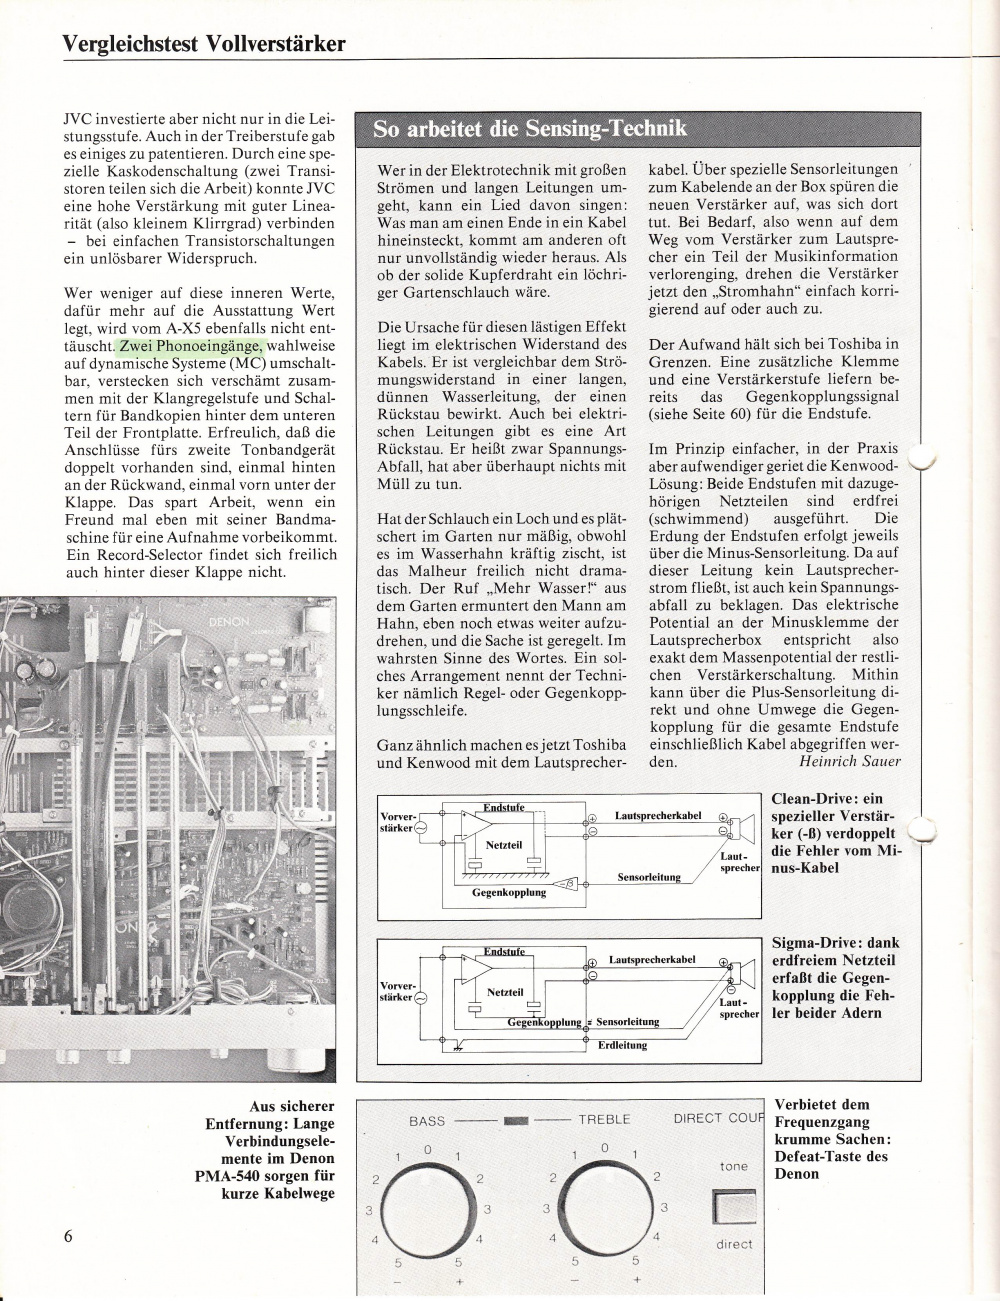 Stereoplay April 1981 9 Verstärker im Vergleich 06.jpg